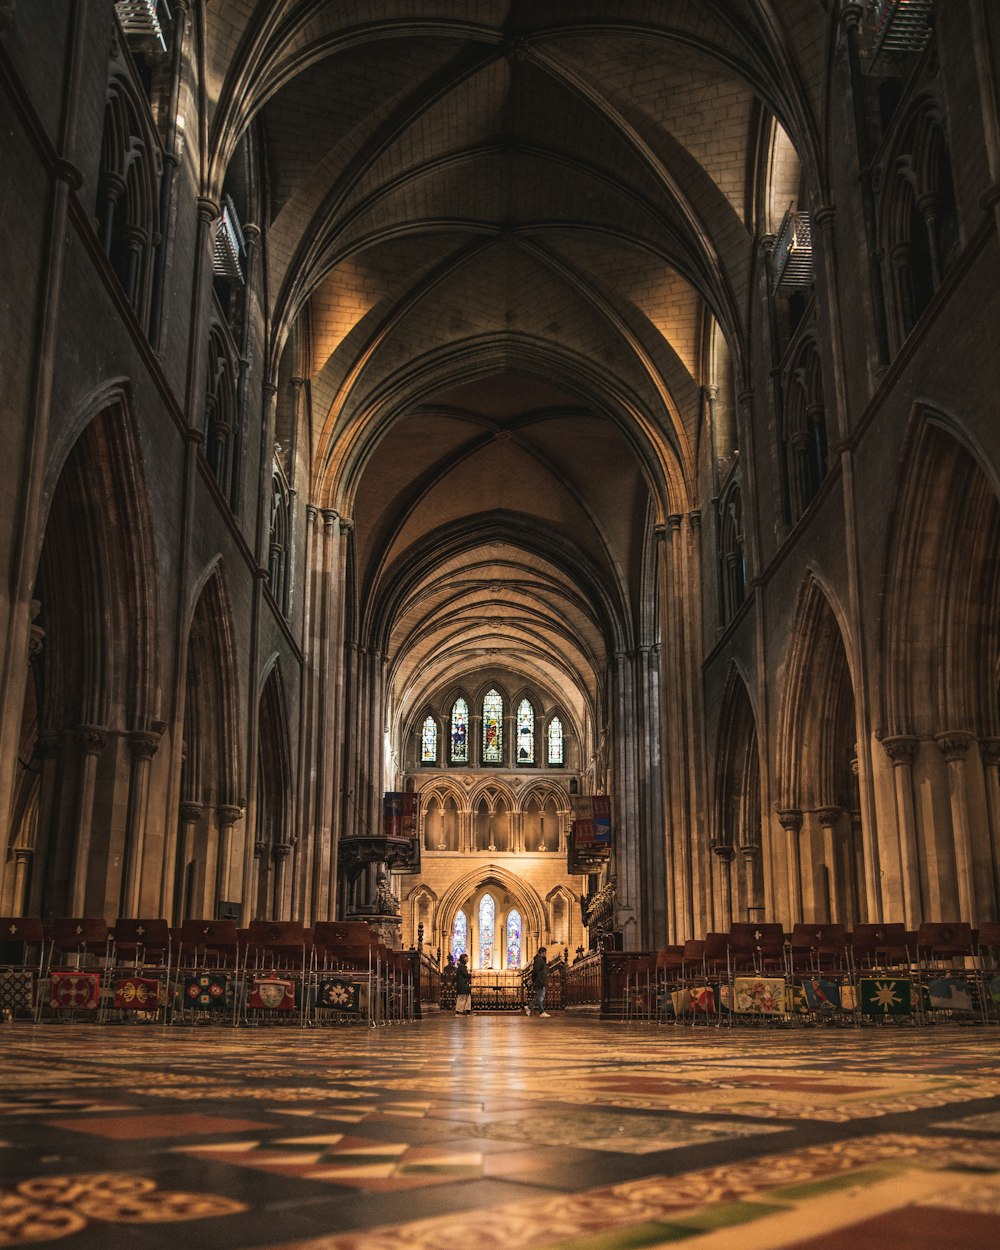 interior of St. Patrick's Cathedral, Dublin, Ireland